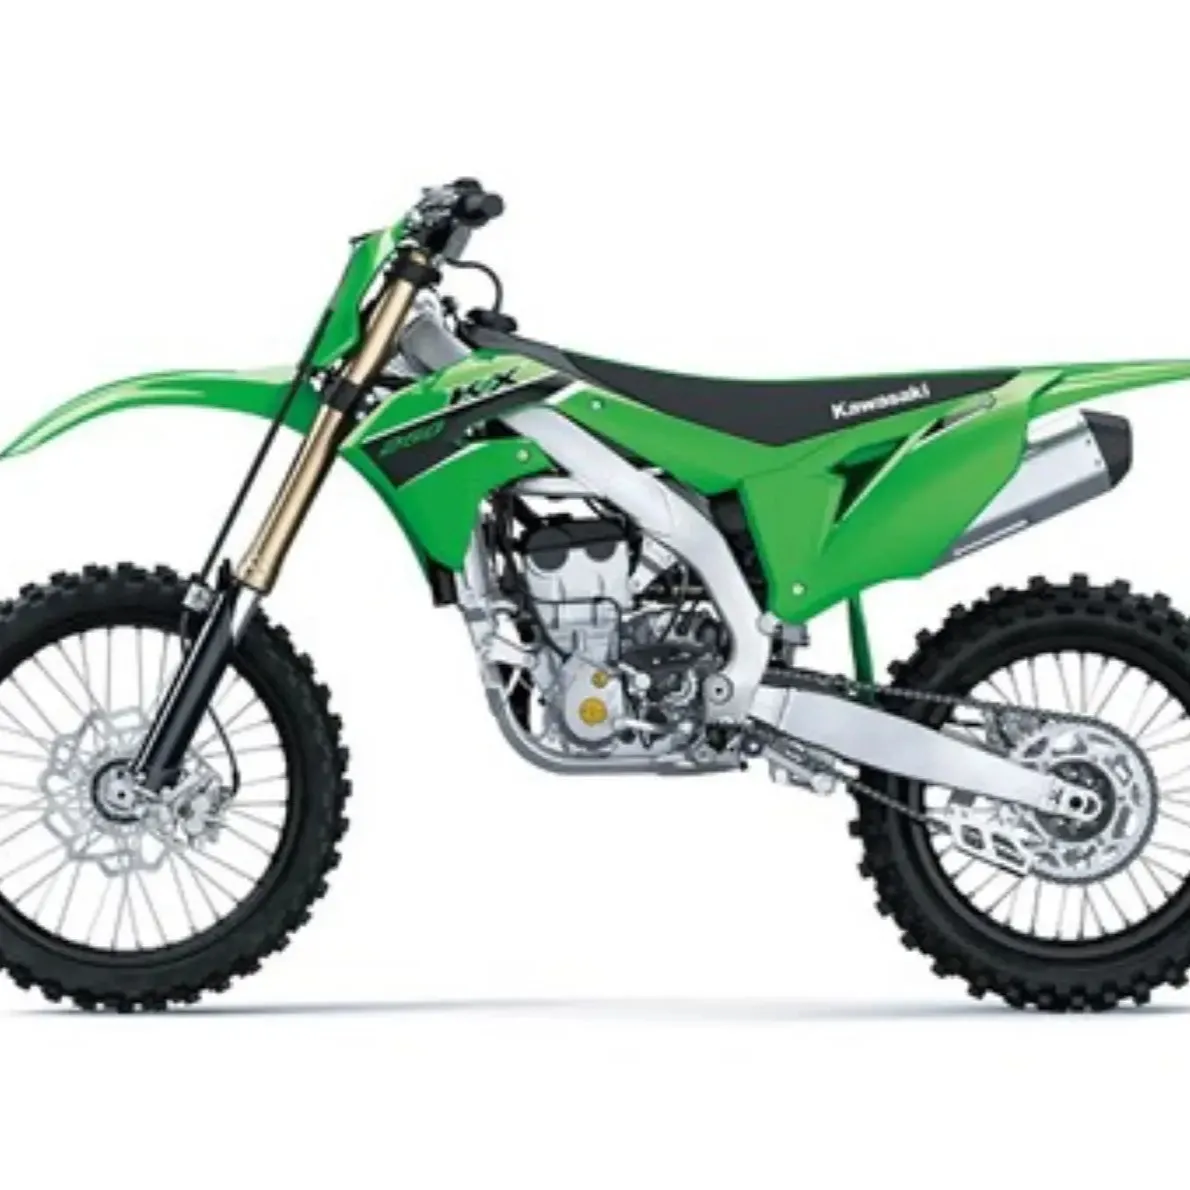 Vendite assemblate nuove Kawasakii KX 250 motociclette Offroad